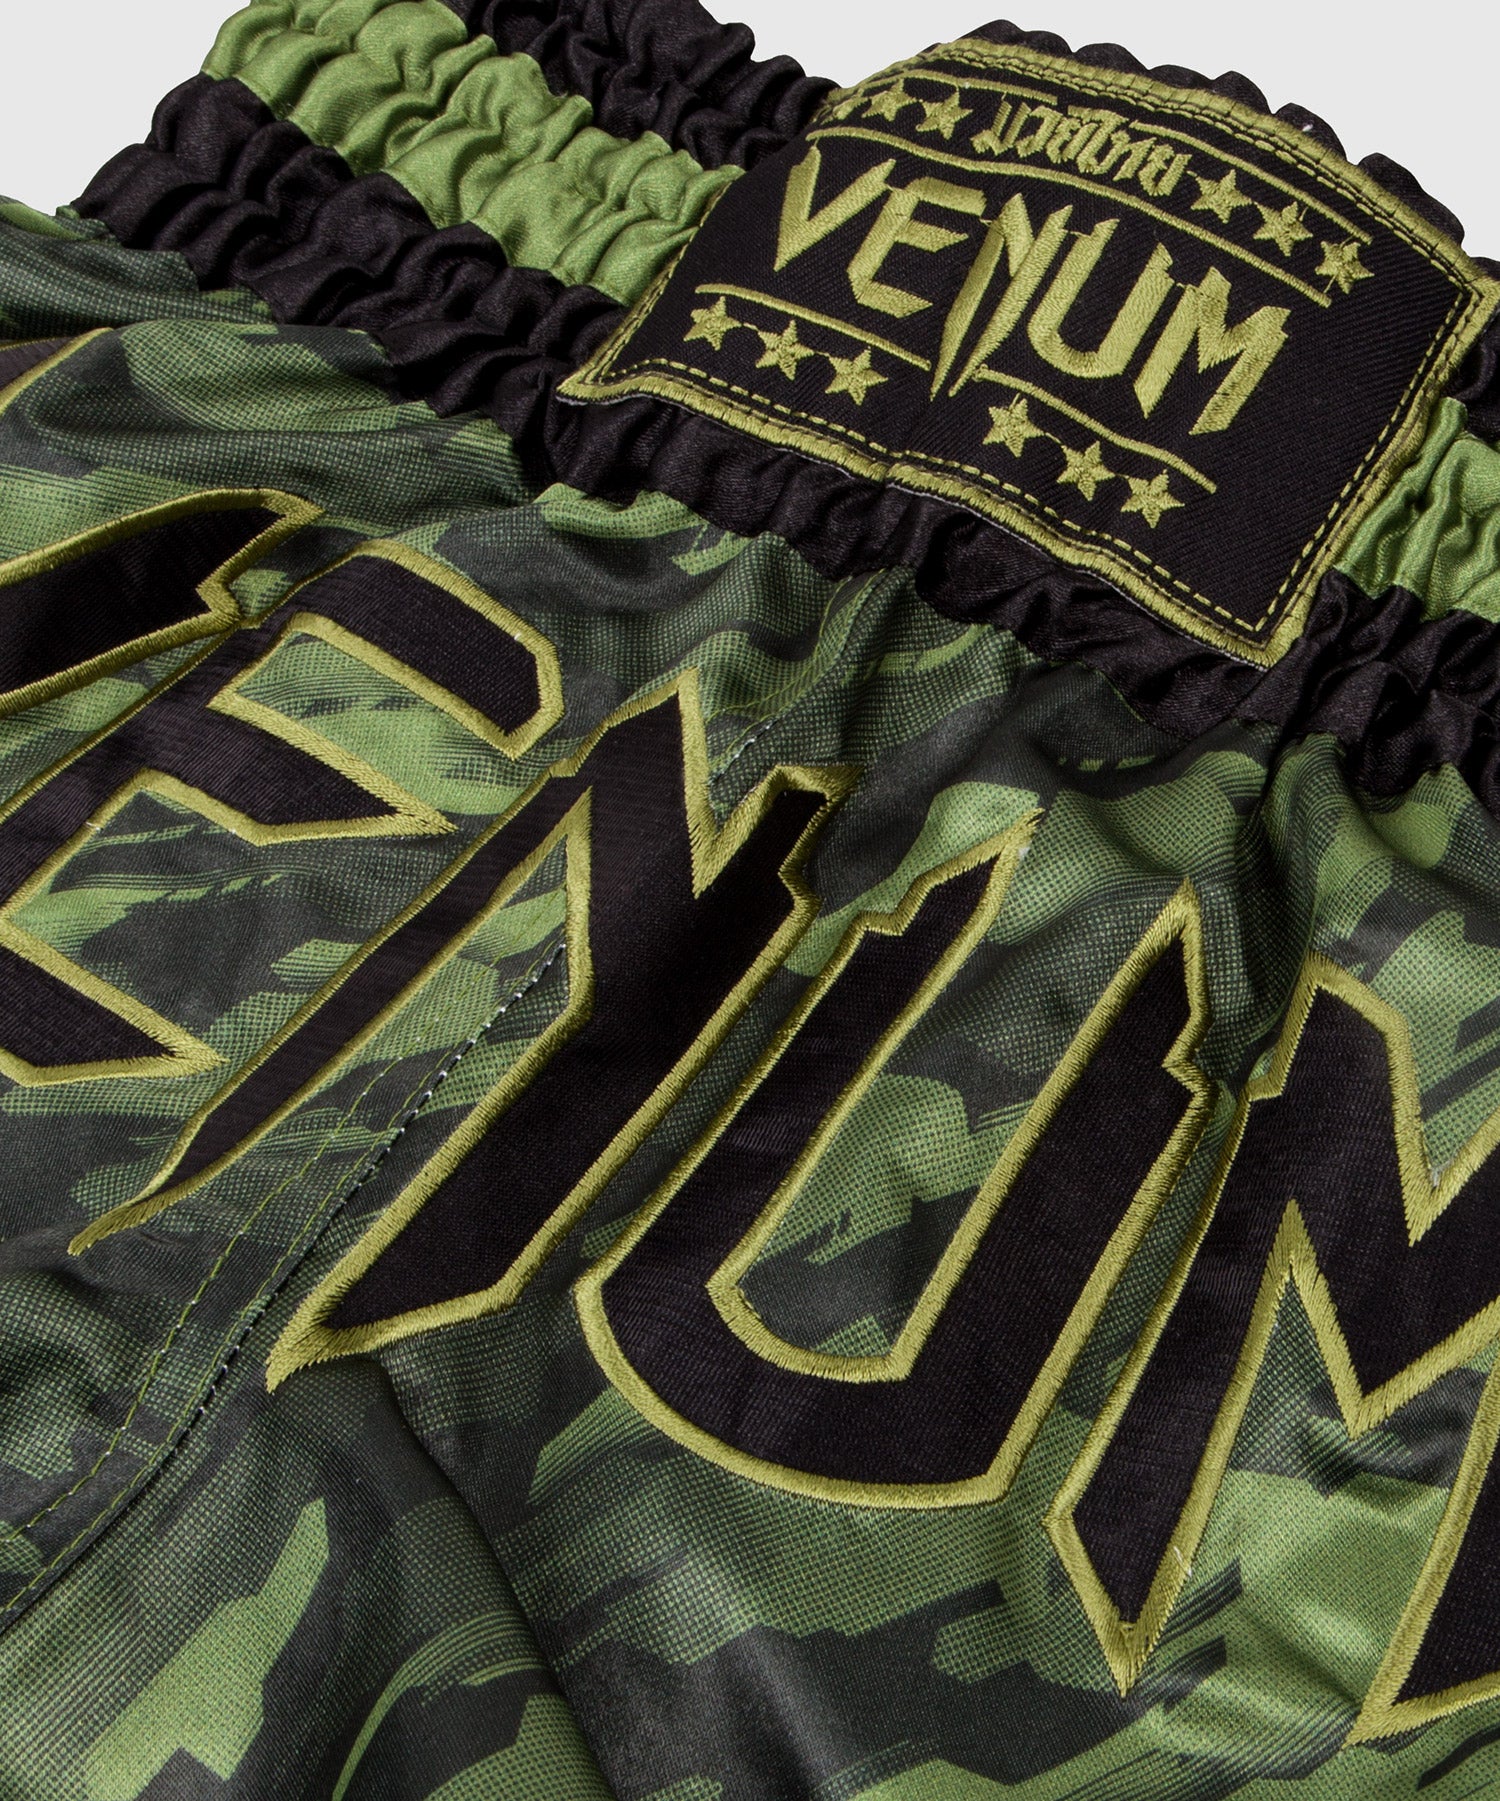 Venum - The Tecmo Muay Thai Shorts are now available worldwide. Enjoy the  Bangkok style! #venum #picoftheday #instacool #bangkok #muaythai  #muaythaishorts #venumgear #venumshorts #tecmo #antoinepinto #boxinggloves  #traininggear